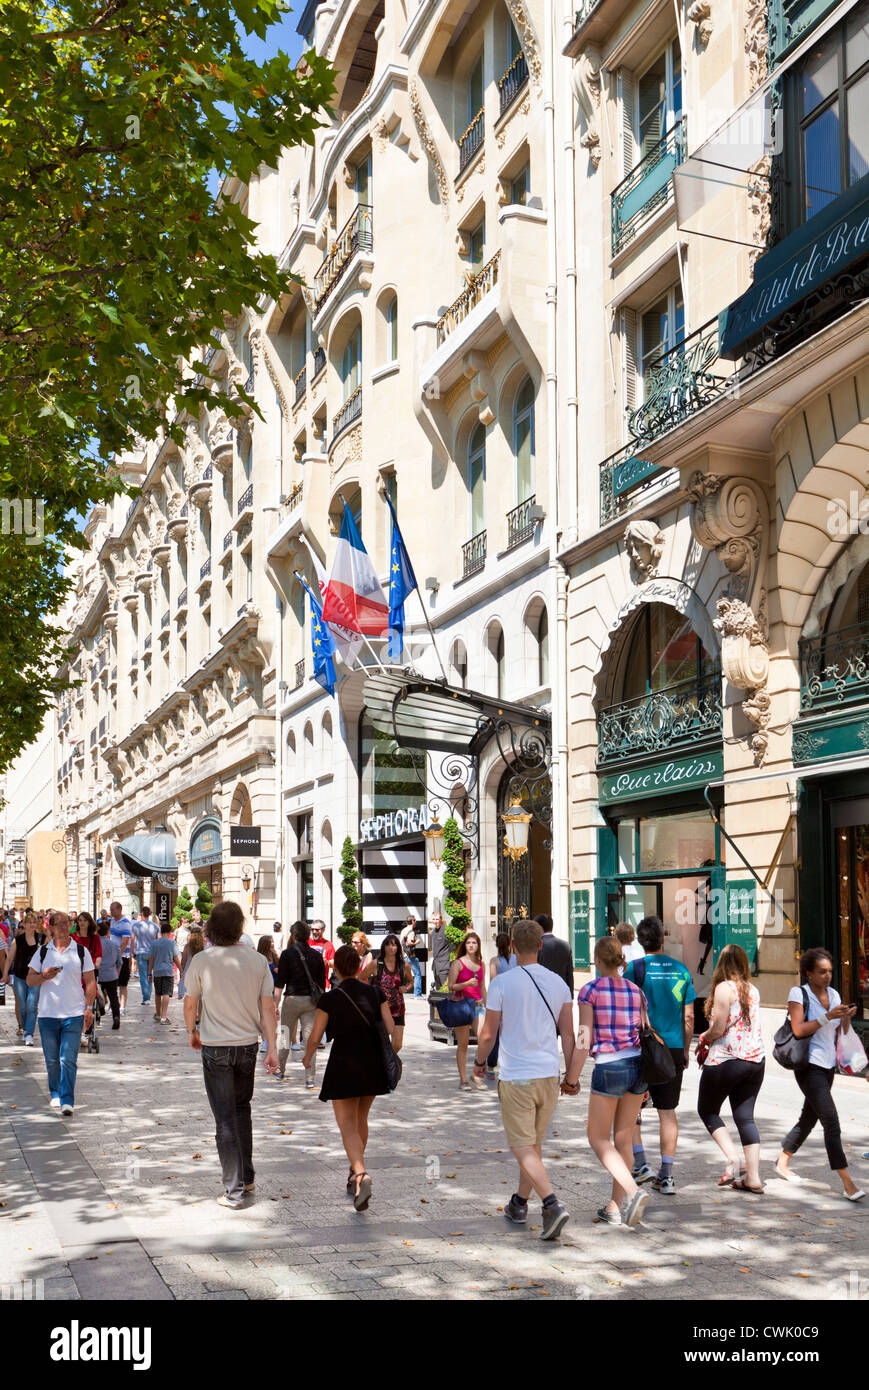 People shopping sulla strada famosa Avenue des Champs Elysees Parigi Francia EU Europe Foto Stock